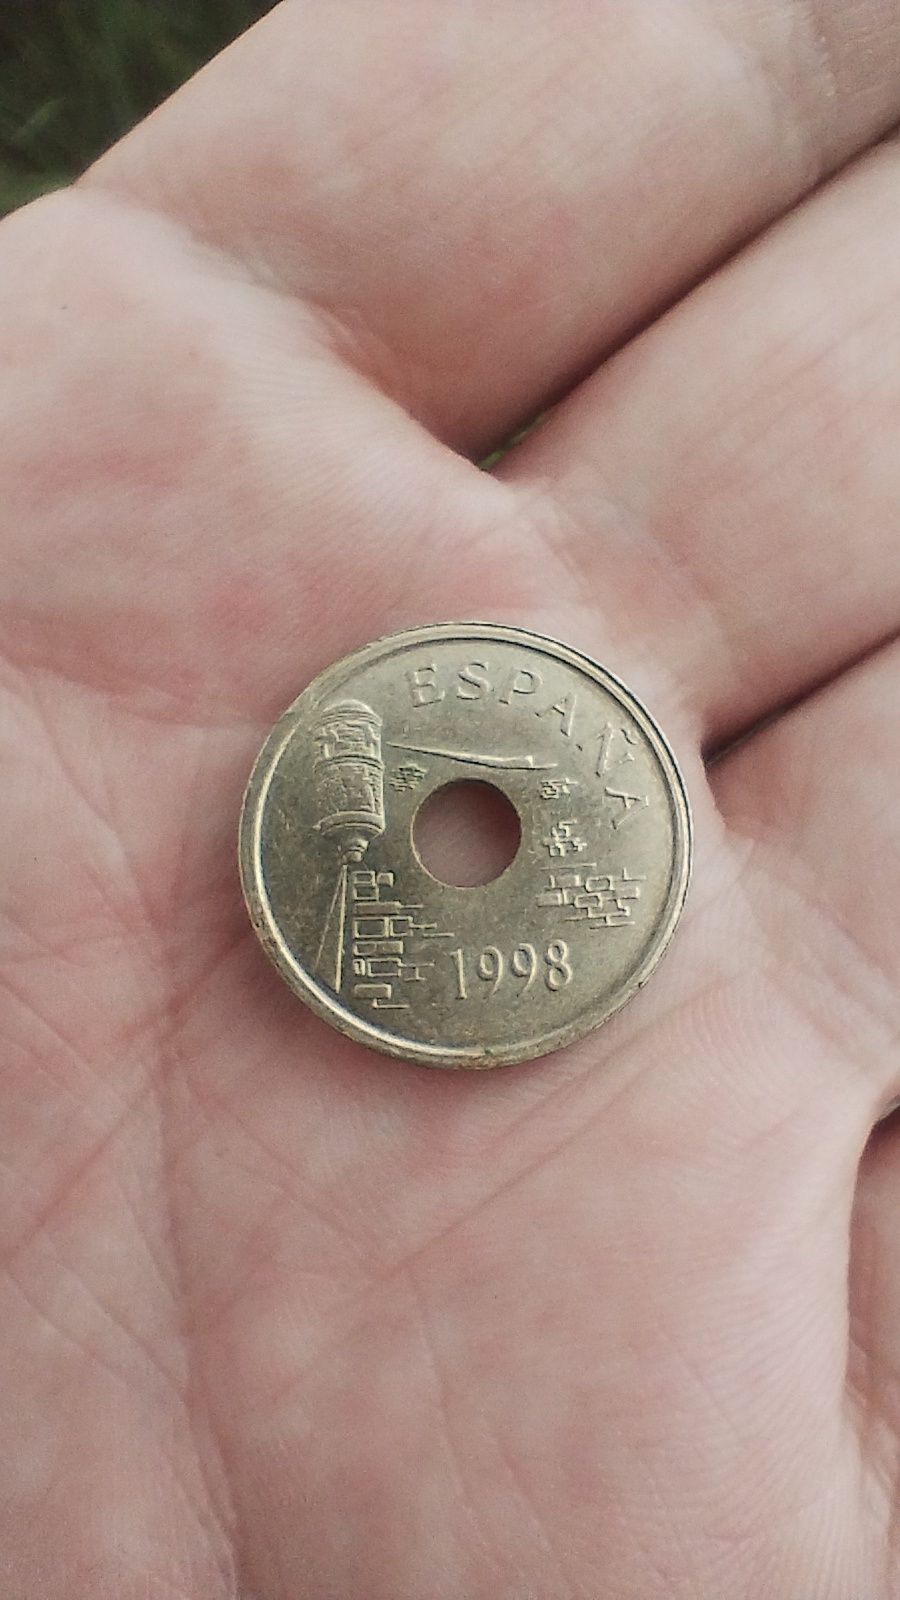 25 ptas, espana, 1998, moneta hiszpańska,